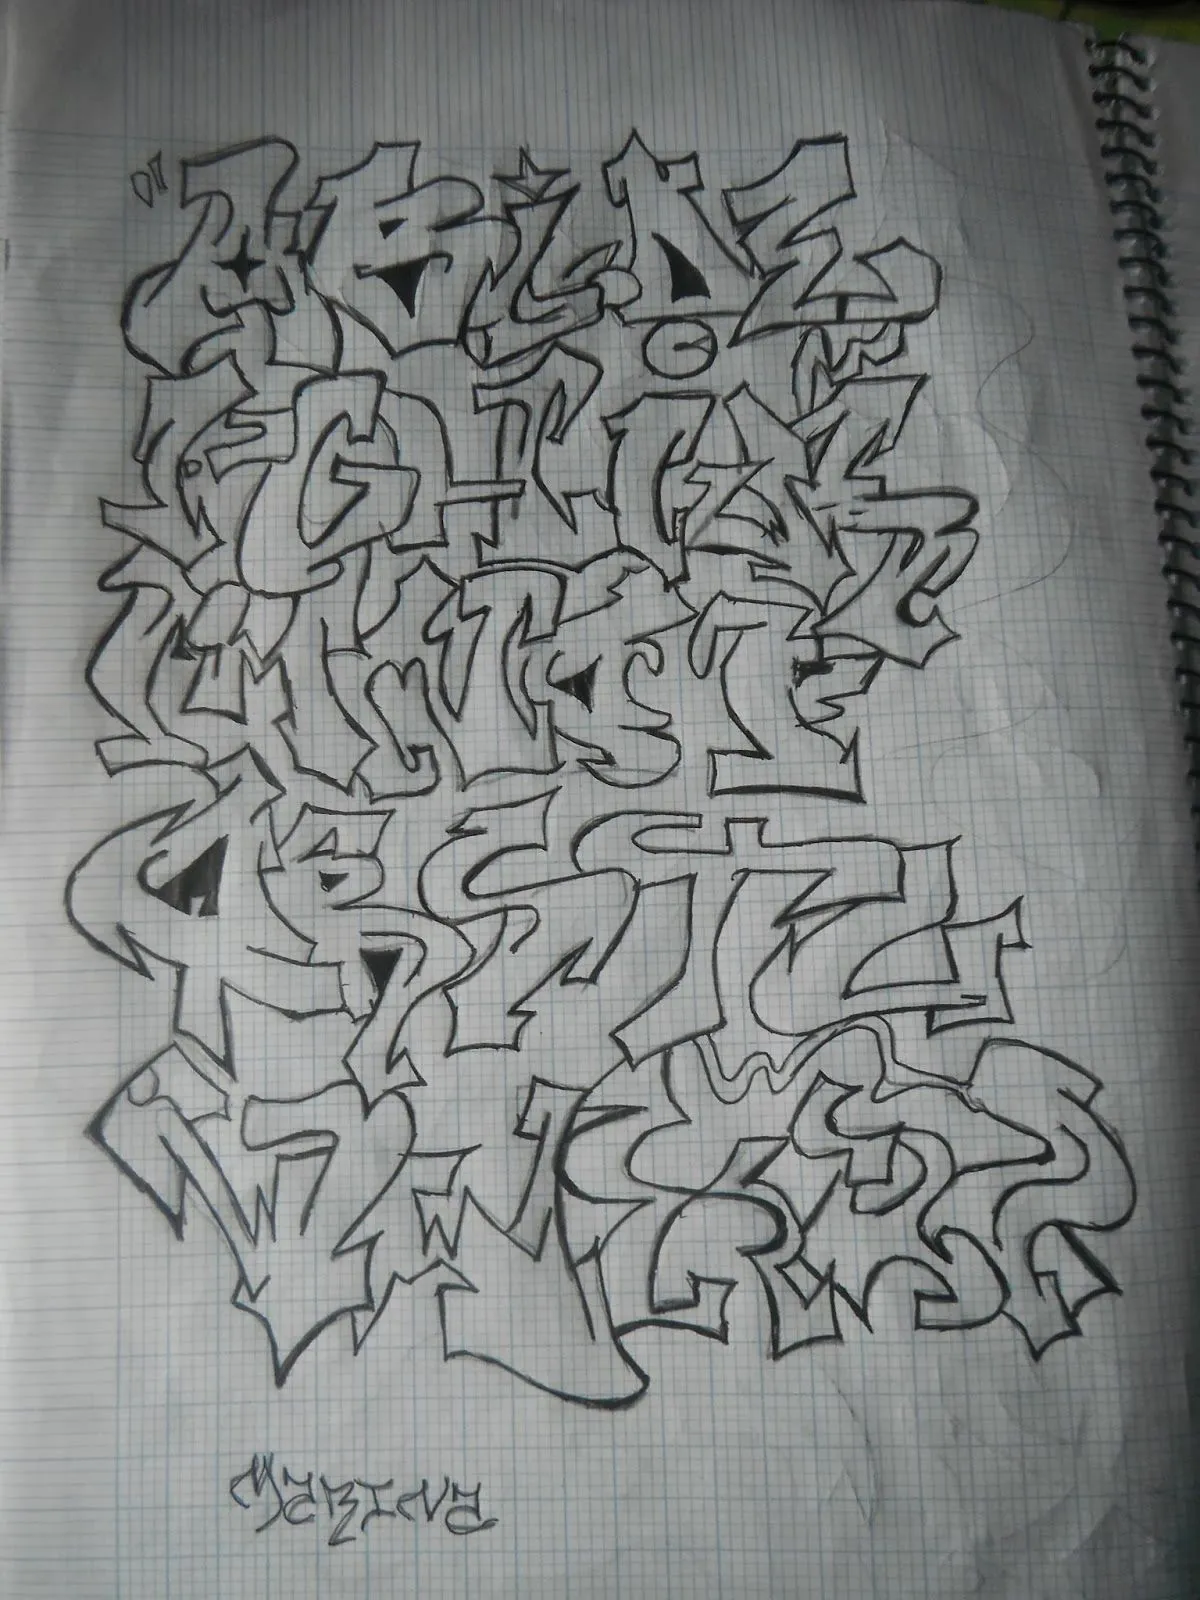 Graffiti abecedario 2014 - Imagui